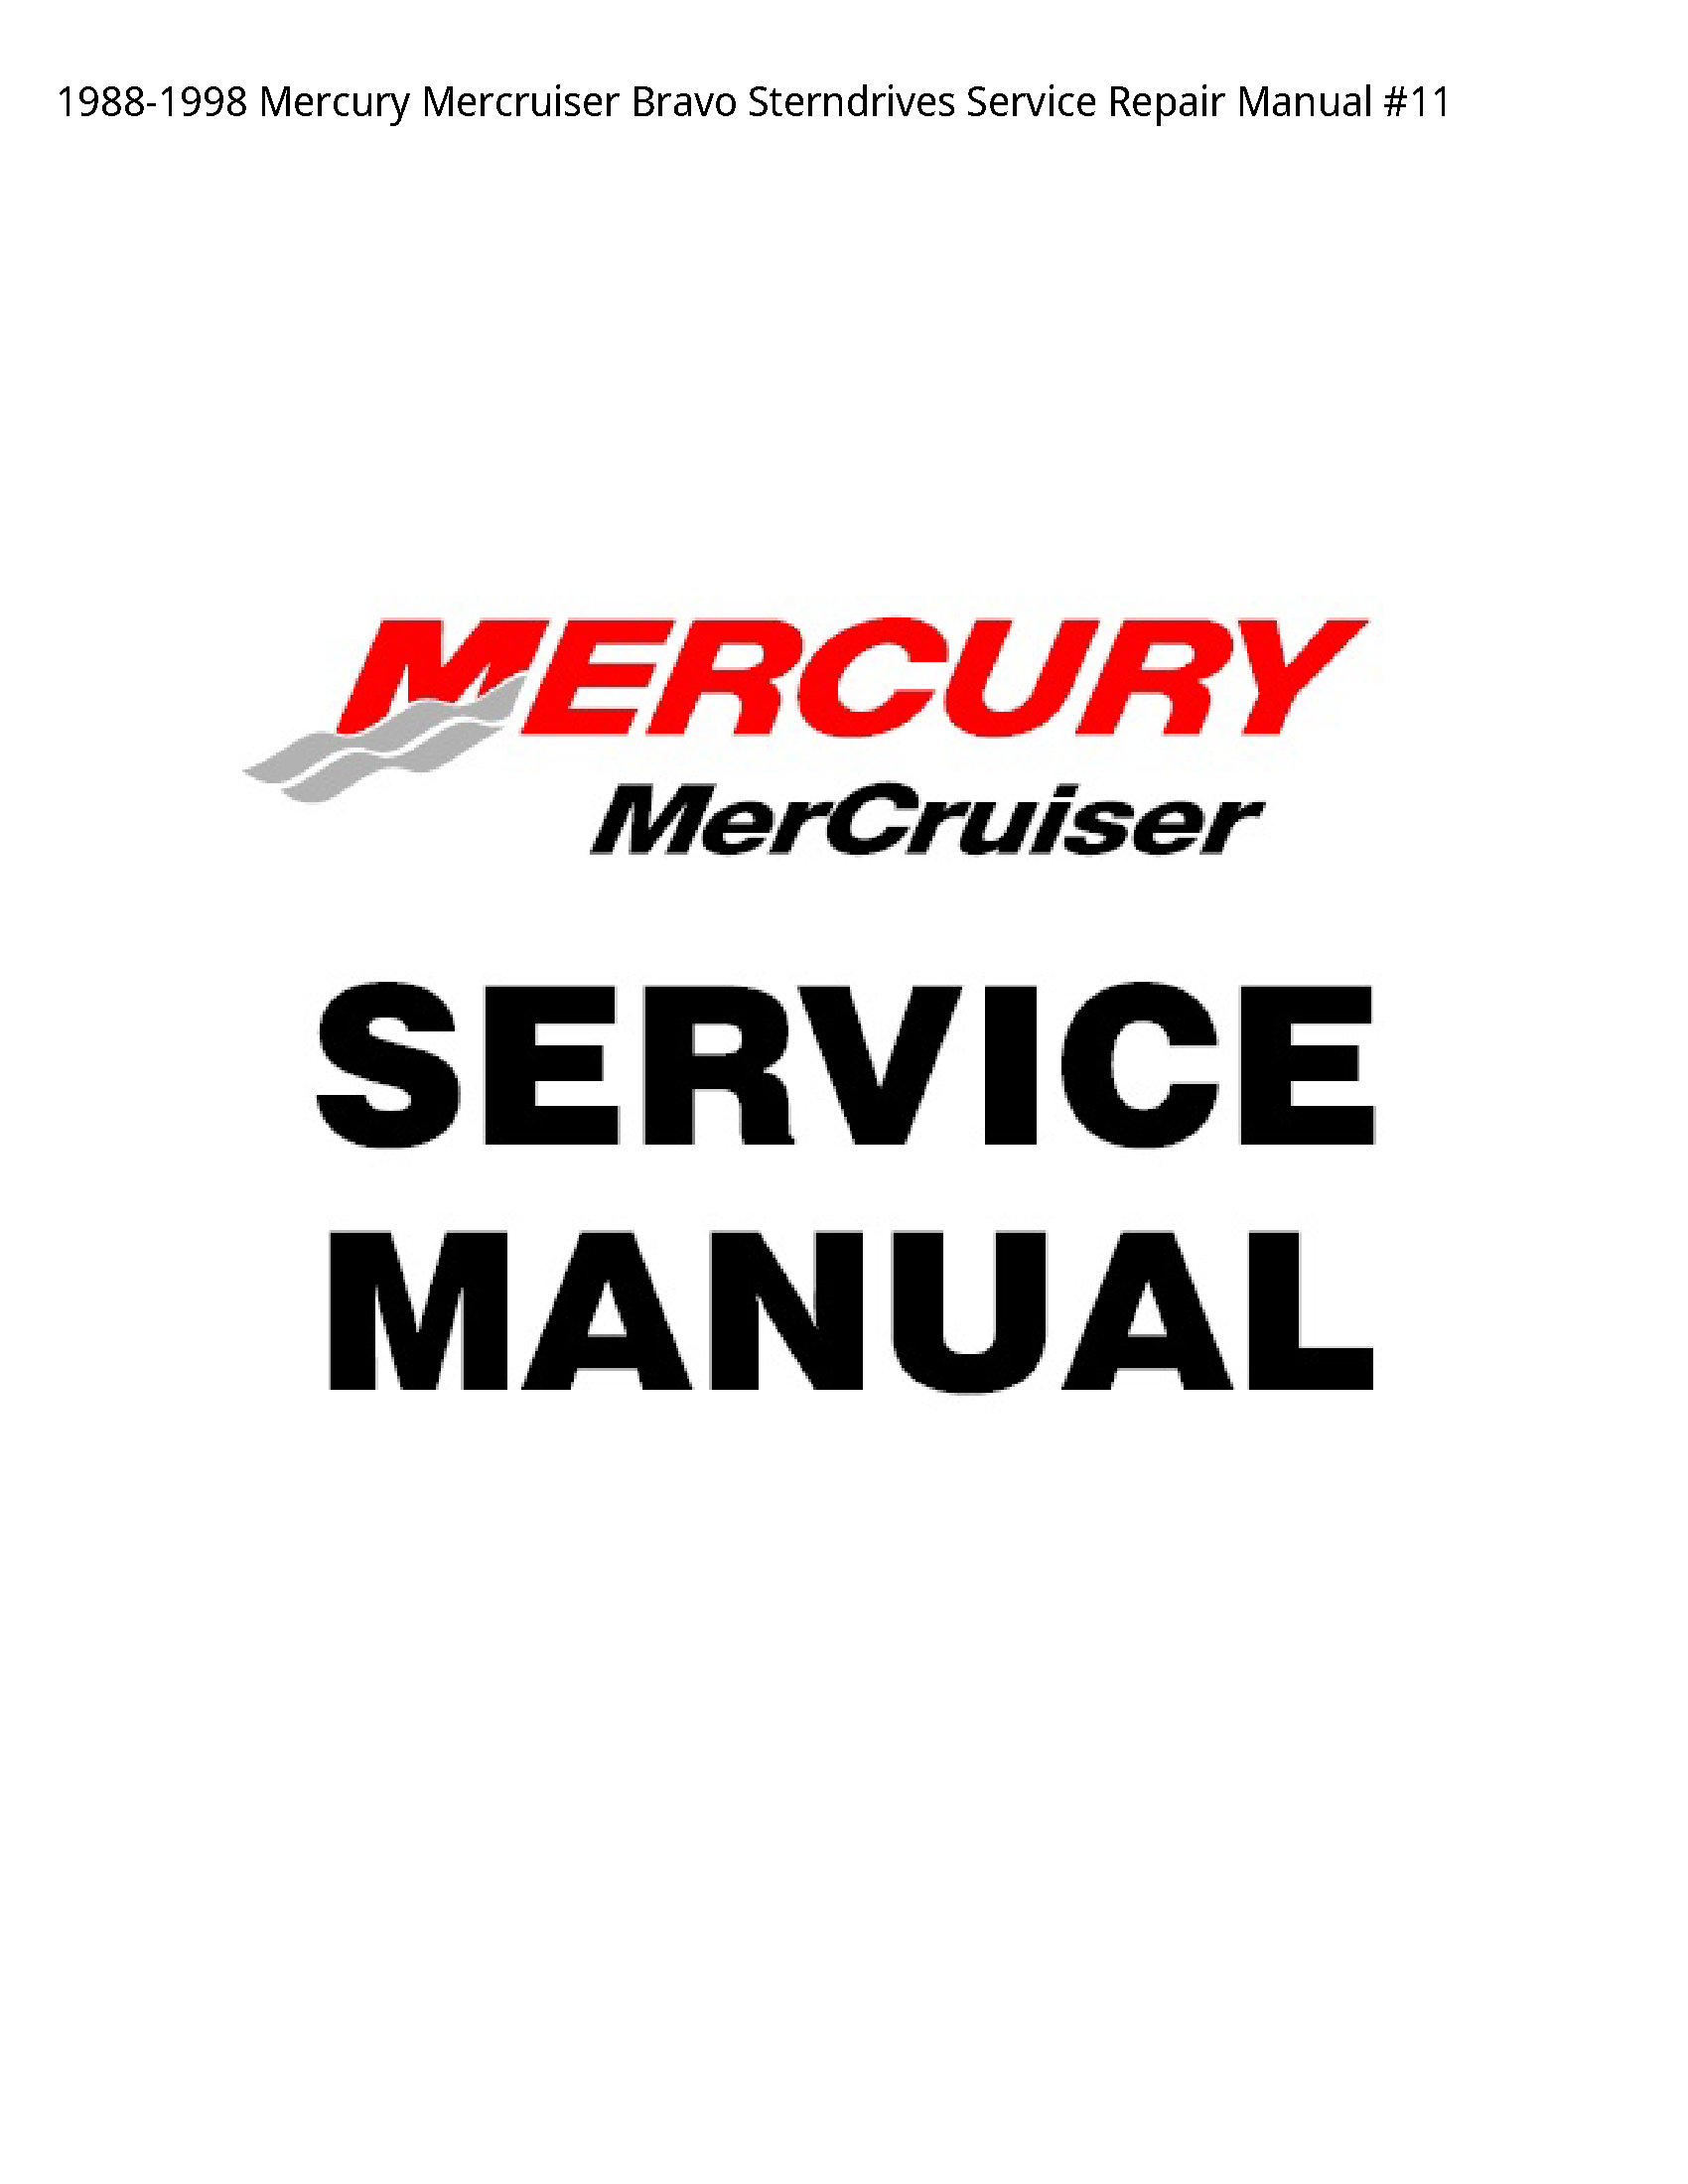 Mercury Mercruiser Bravo Sterndrives manual